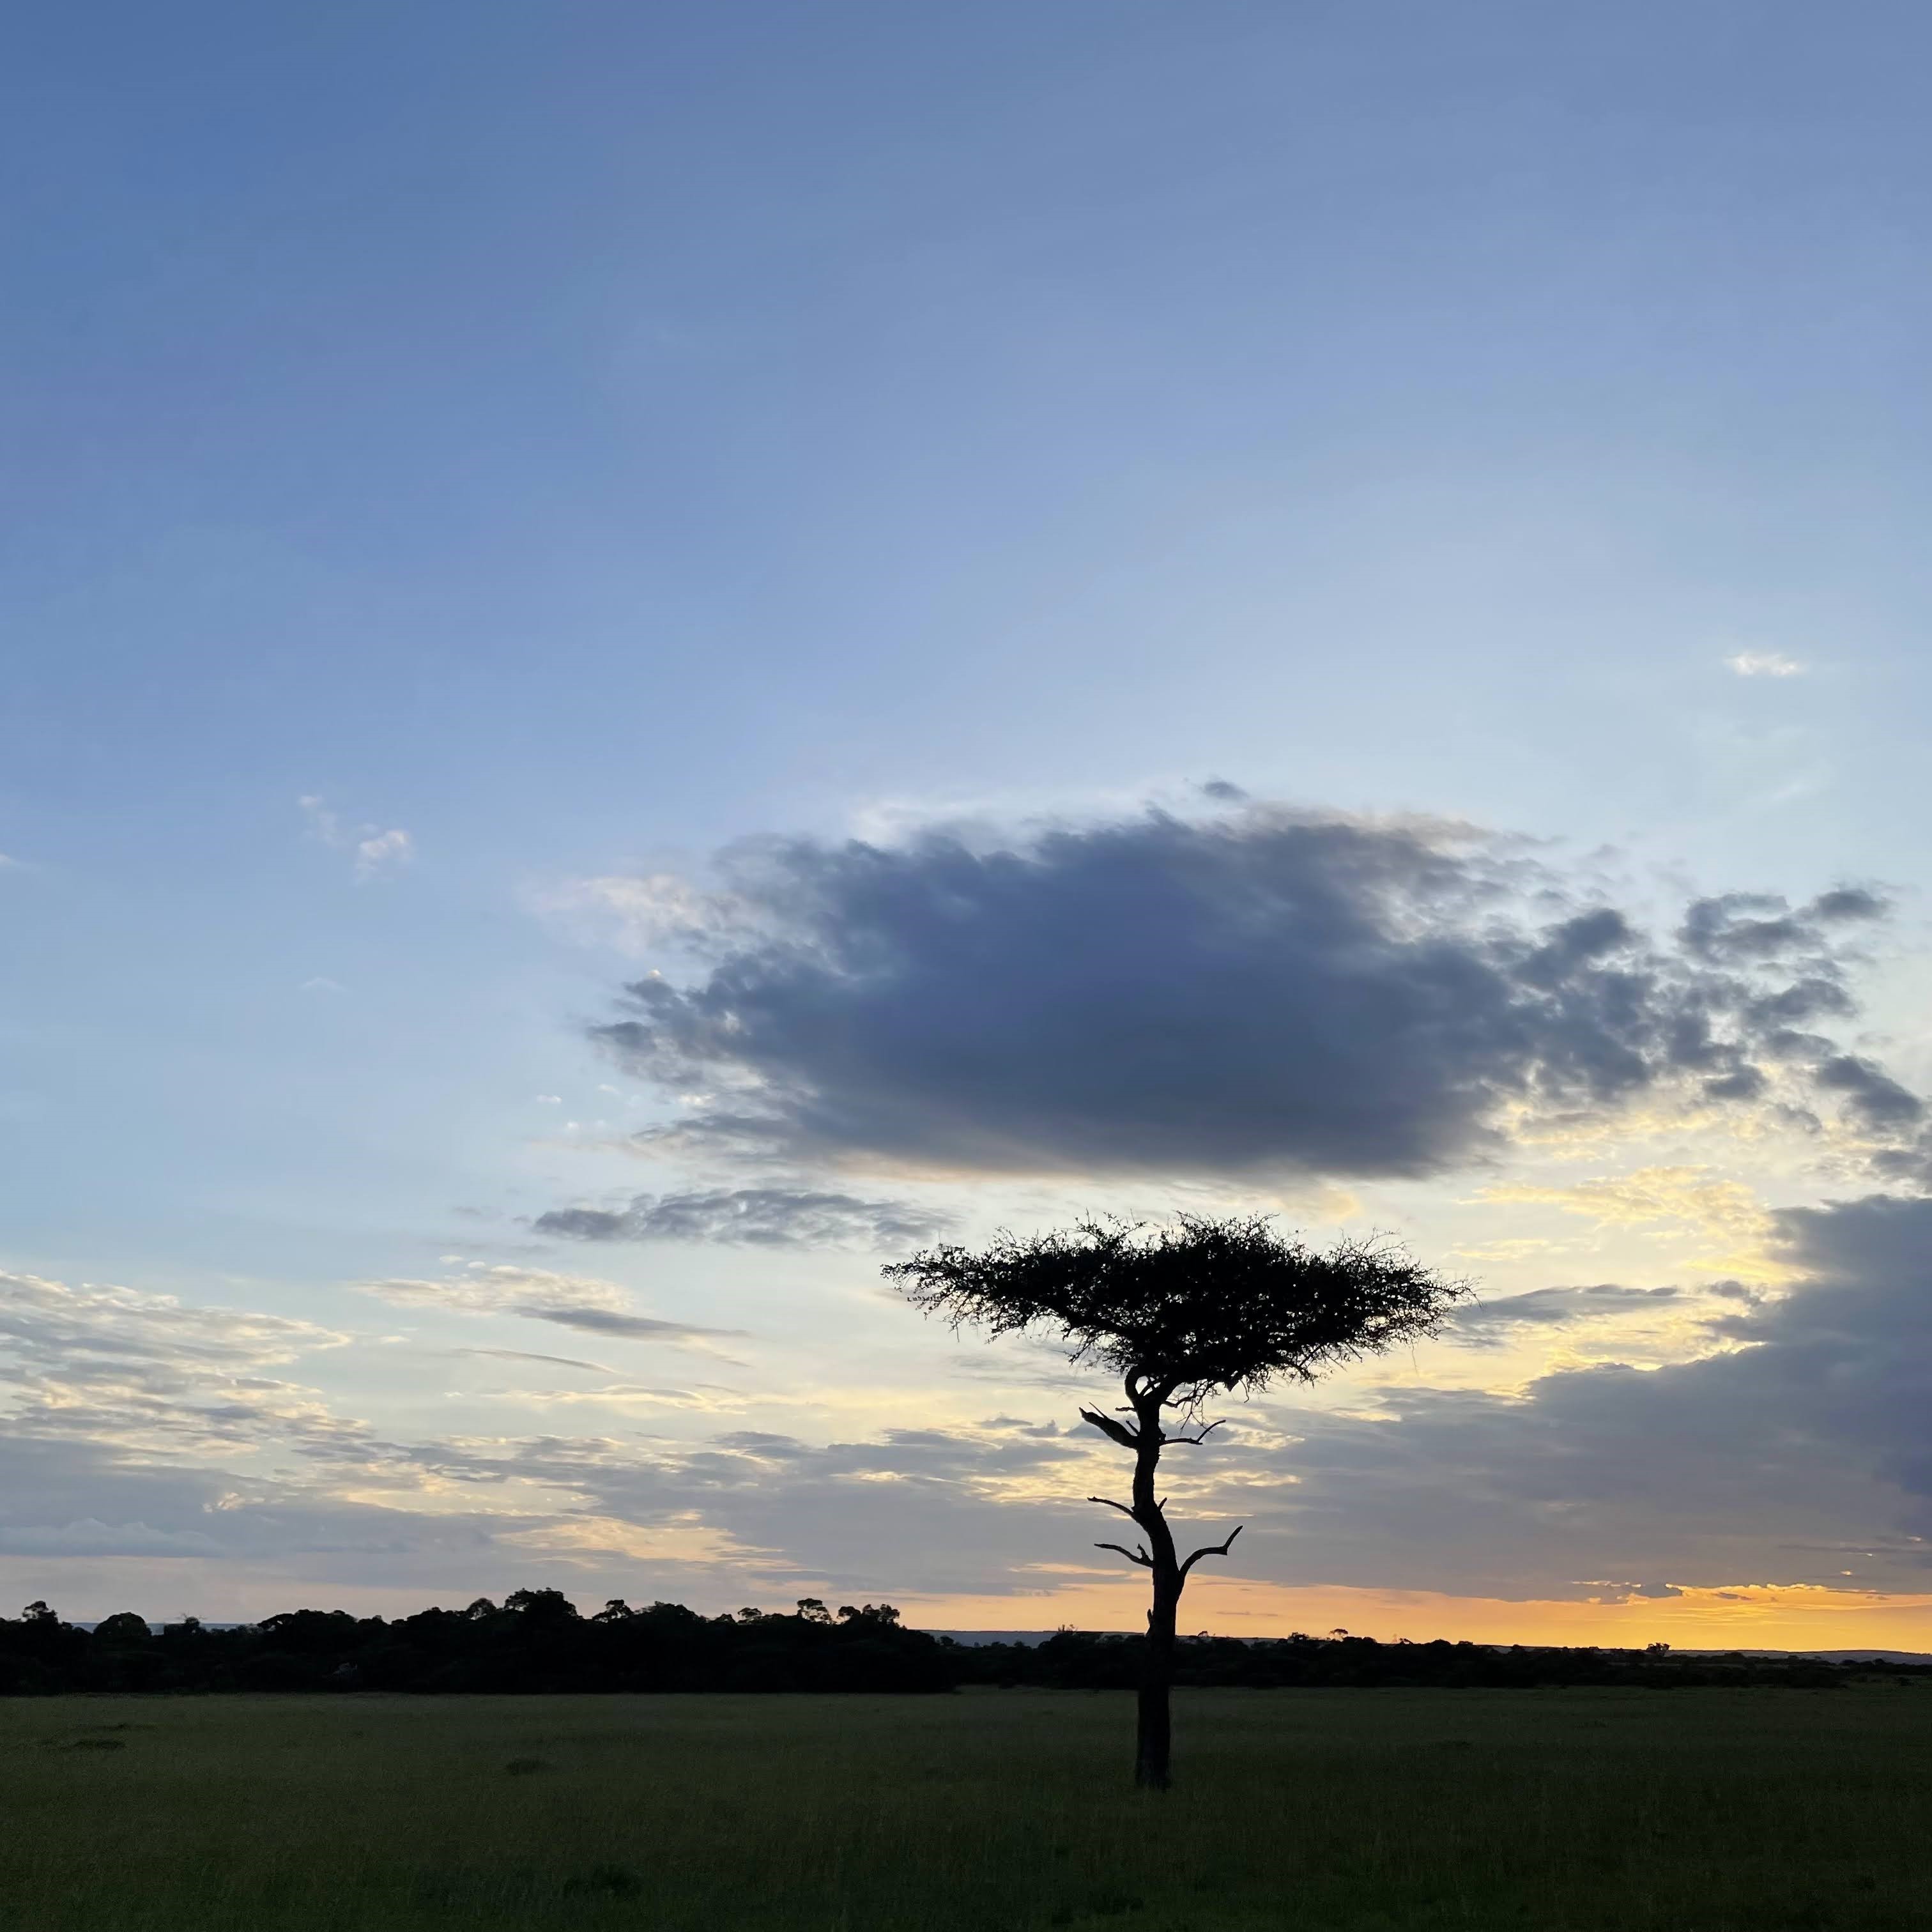 panoramica al amanecer en la sabana kenia